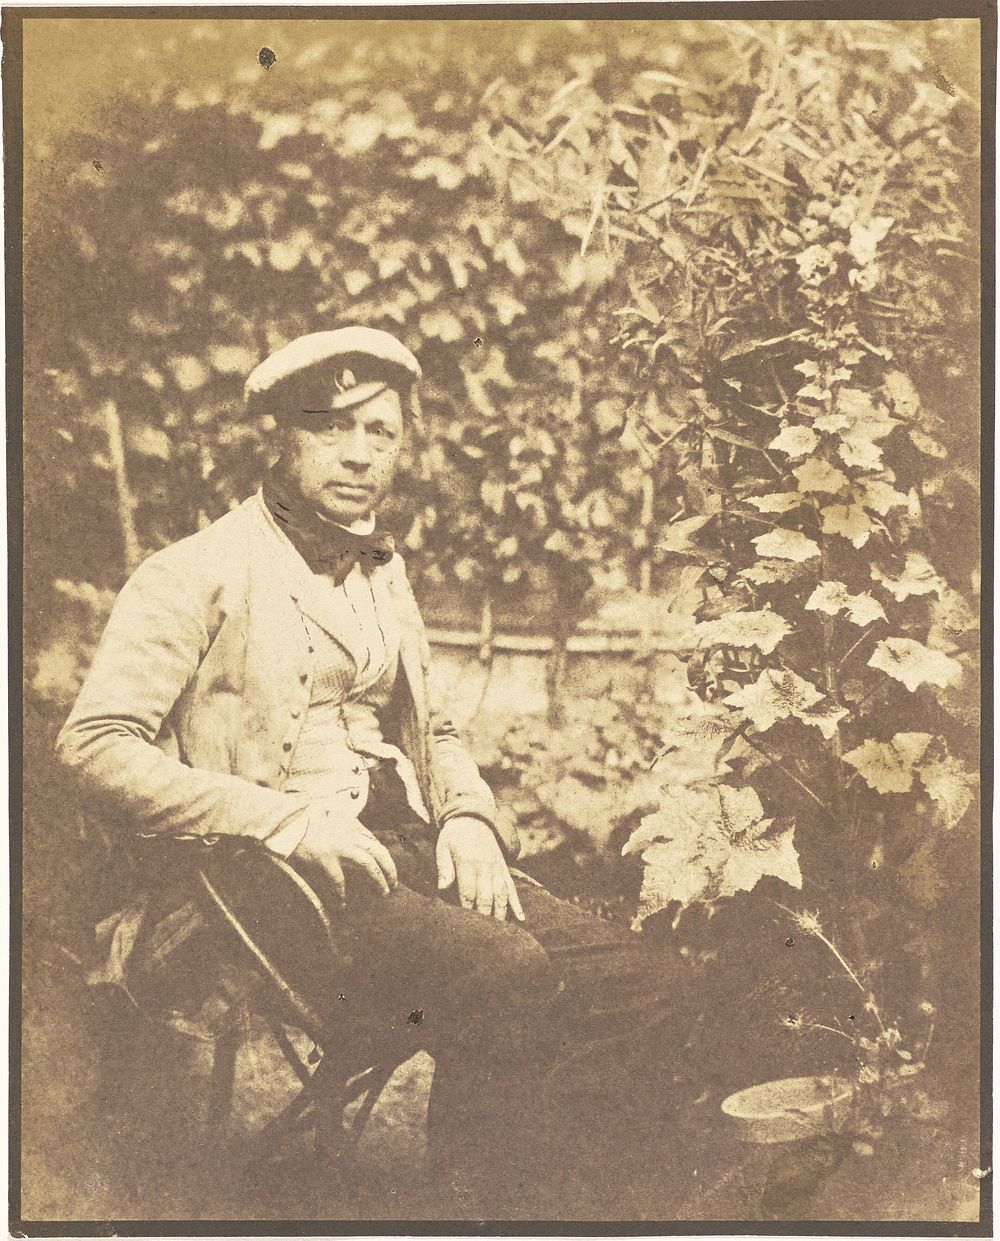 Self-portrait in garden by Hippolyte Bayard